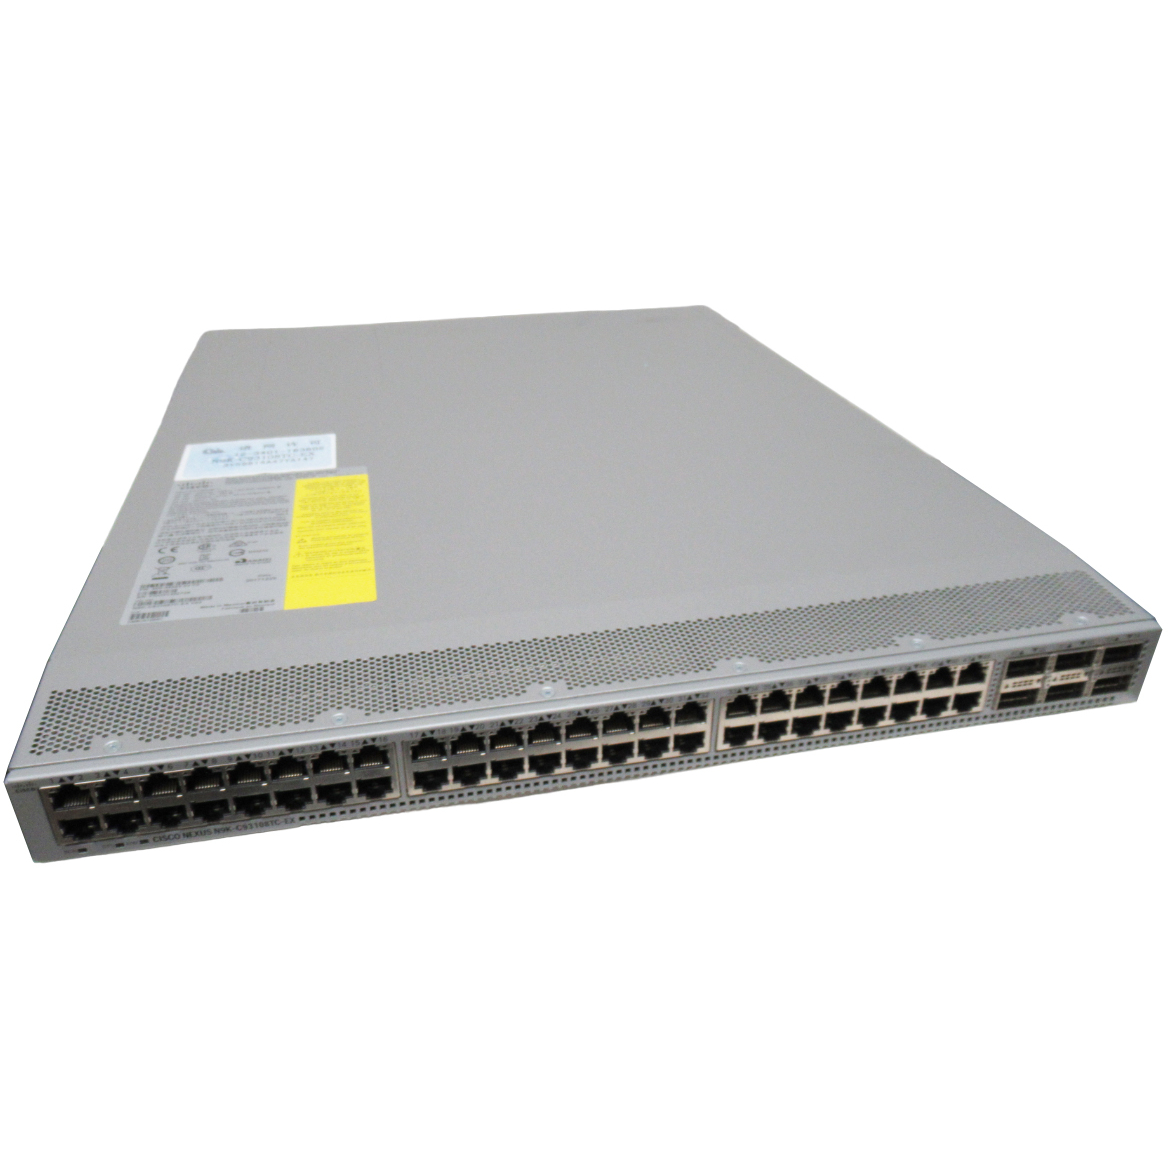 Cisco N9K-C93108TC-FX